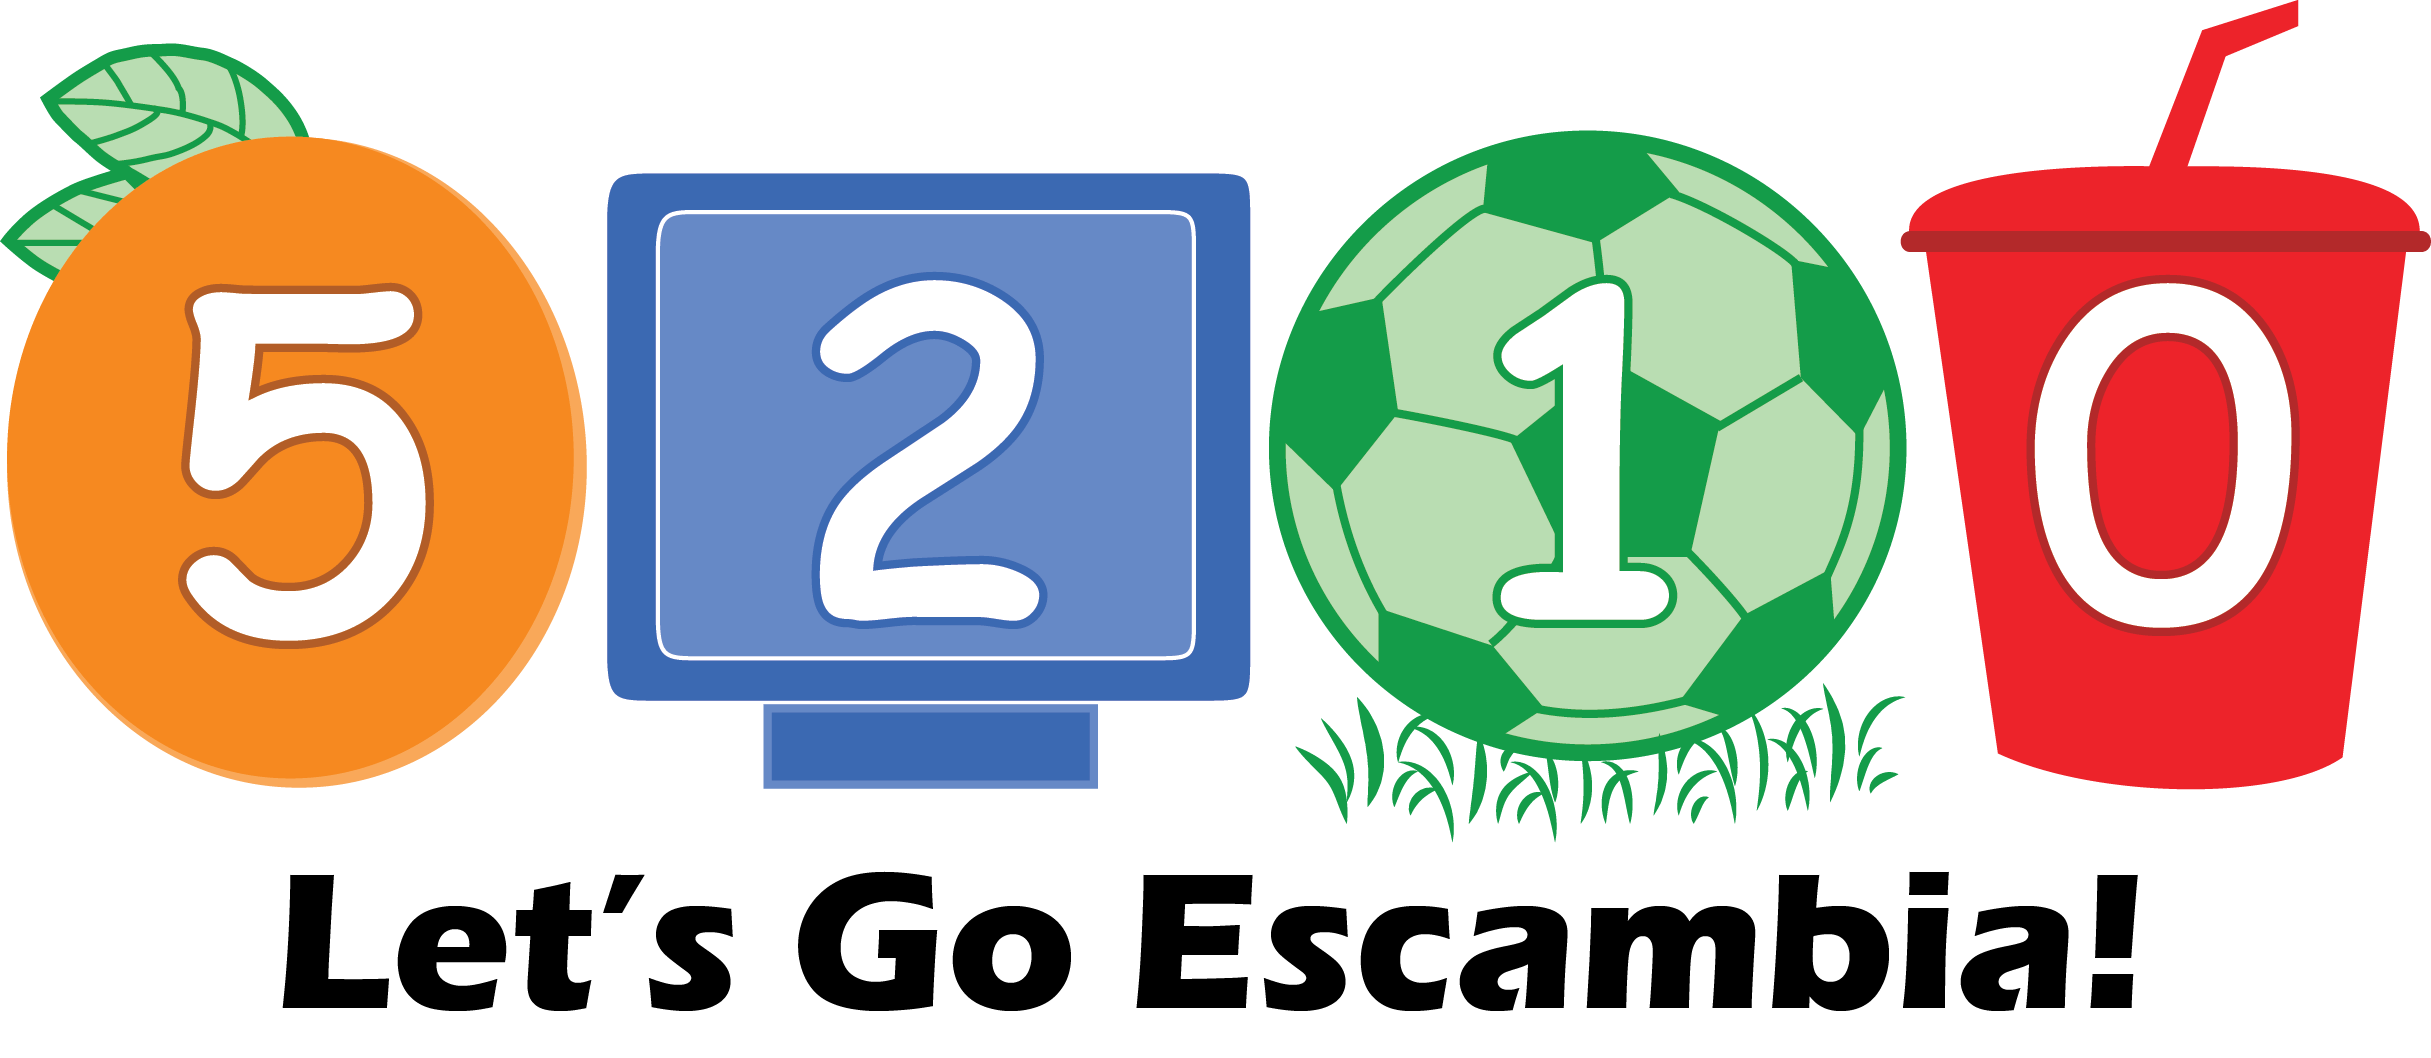 Escambia Logo - 5-2-1-0 Let's Go Northwest Florida! | Florida Department of Health ...